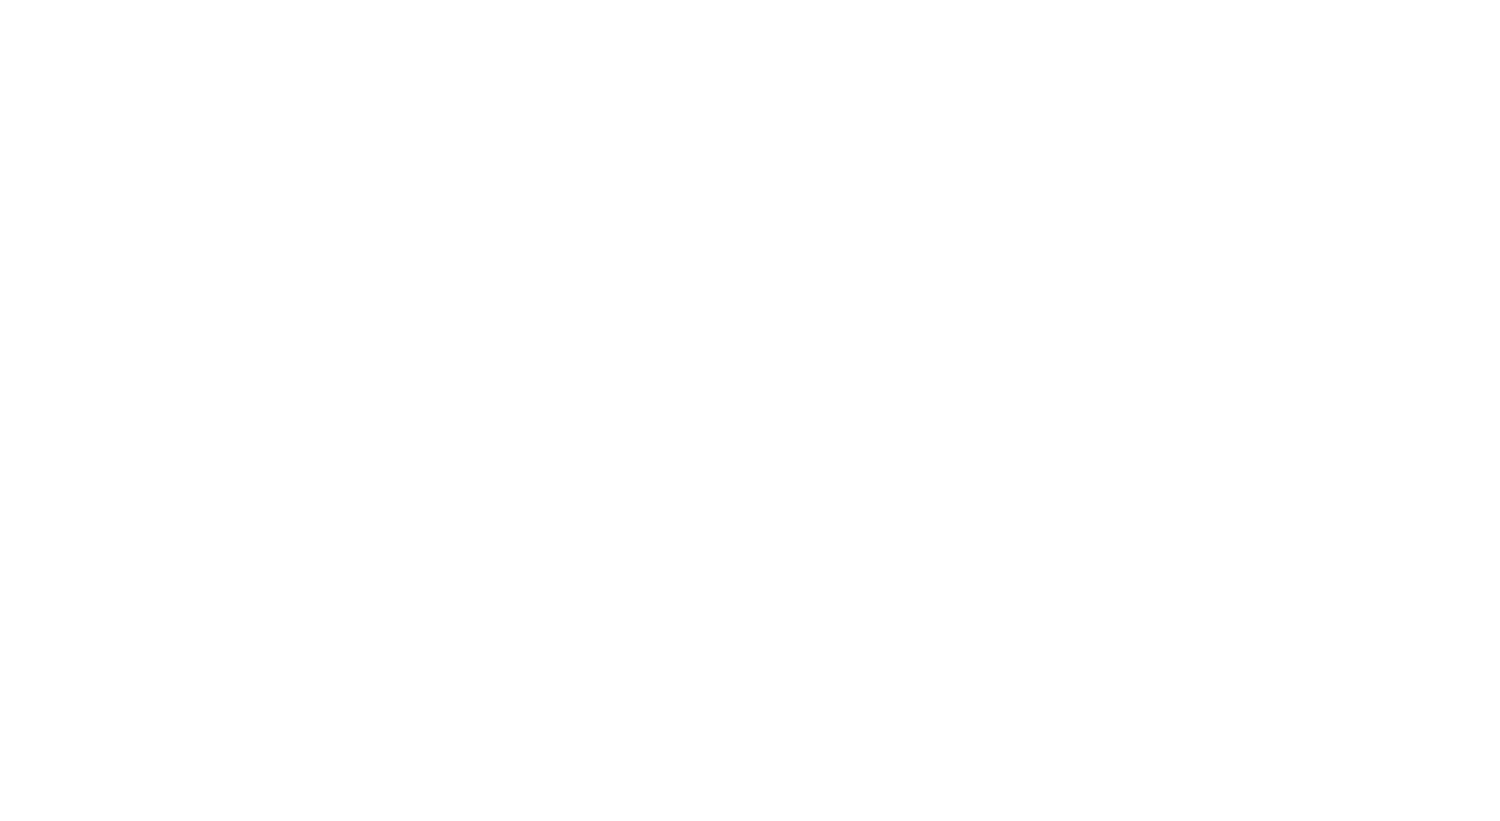 Fly Bird